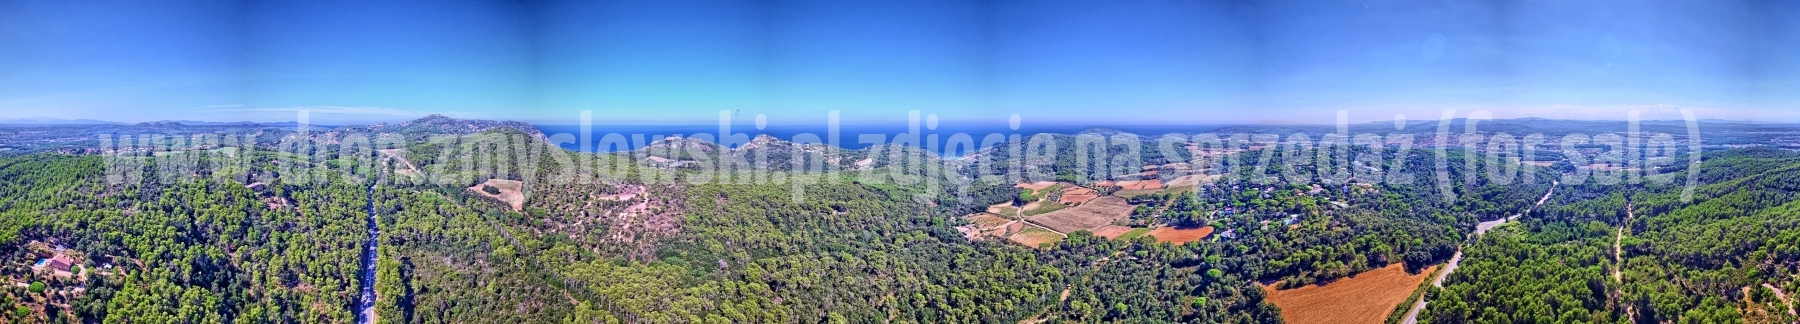 15-Hiszpania-dzien-6-lot-dronem-w-Begur_HDR_panorama_002